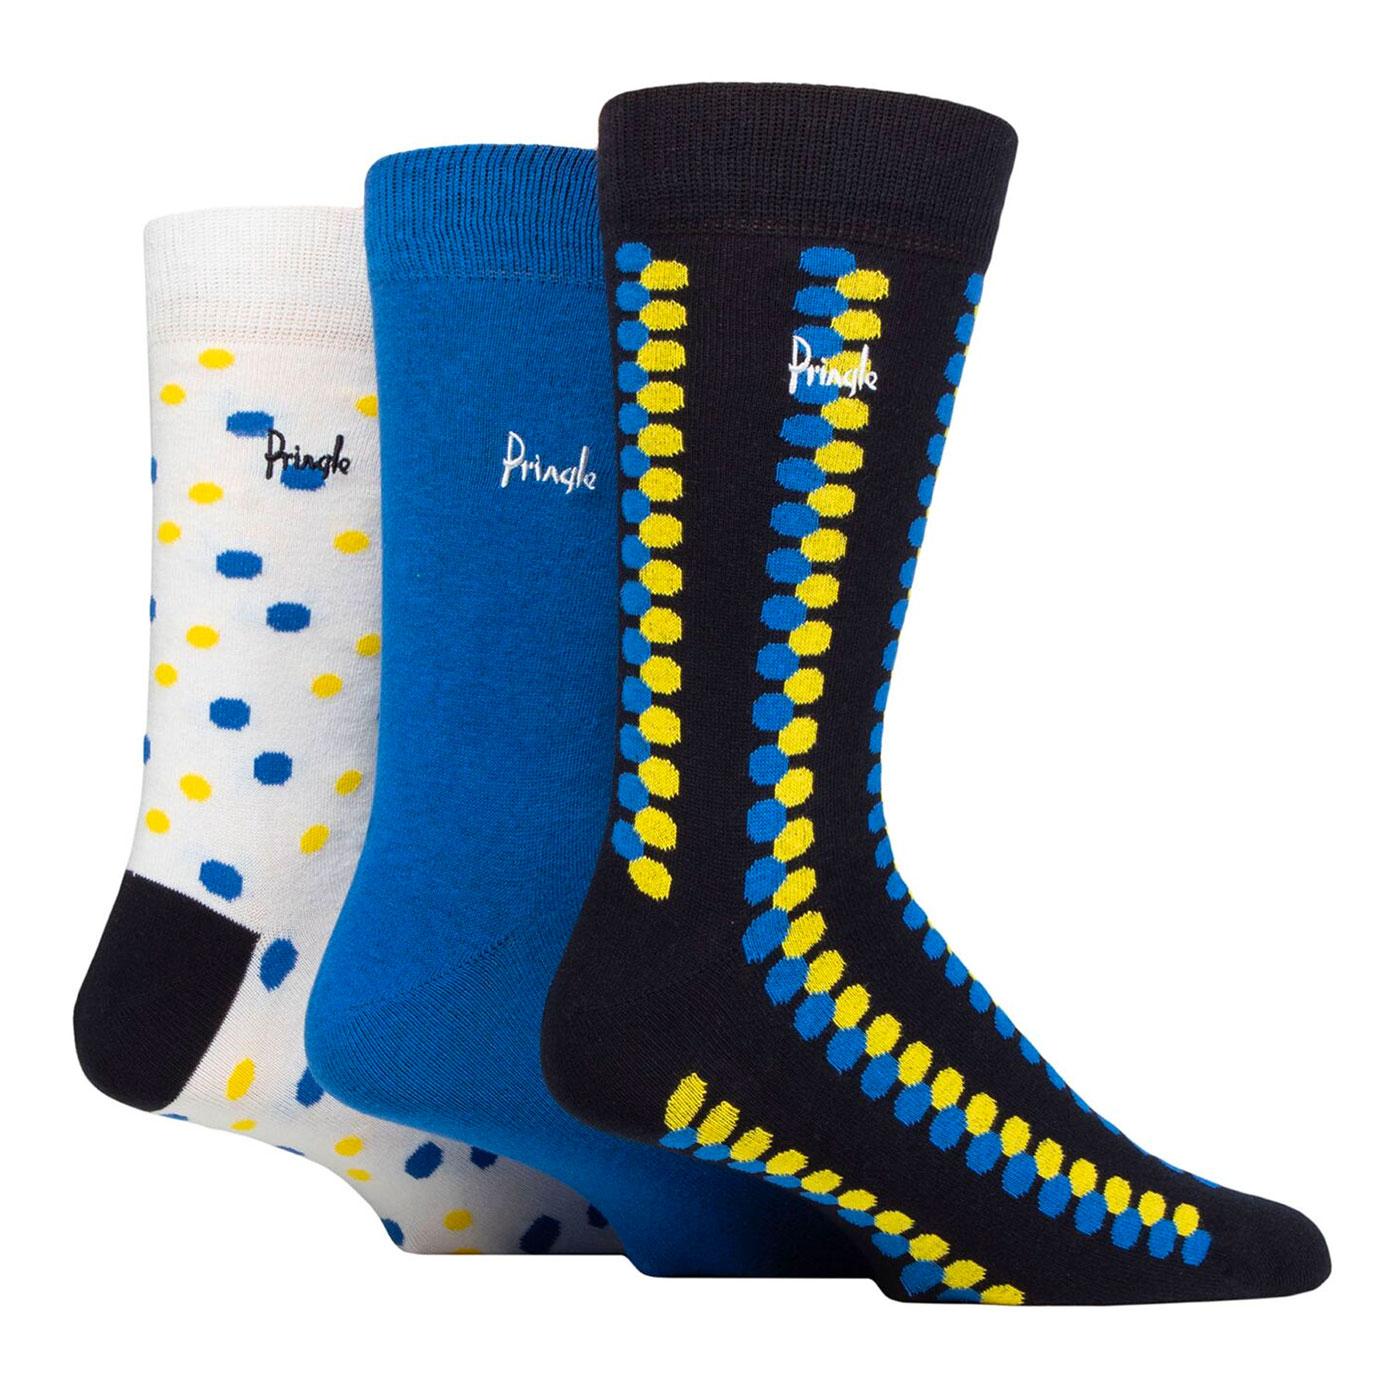 +Pringle 3 Pack Men's Jacquard Spotted Socks N/B/Y